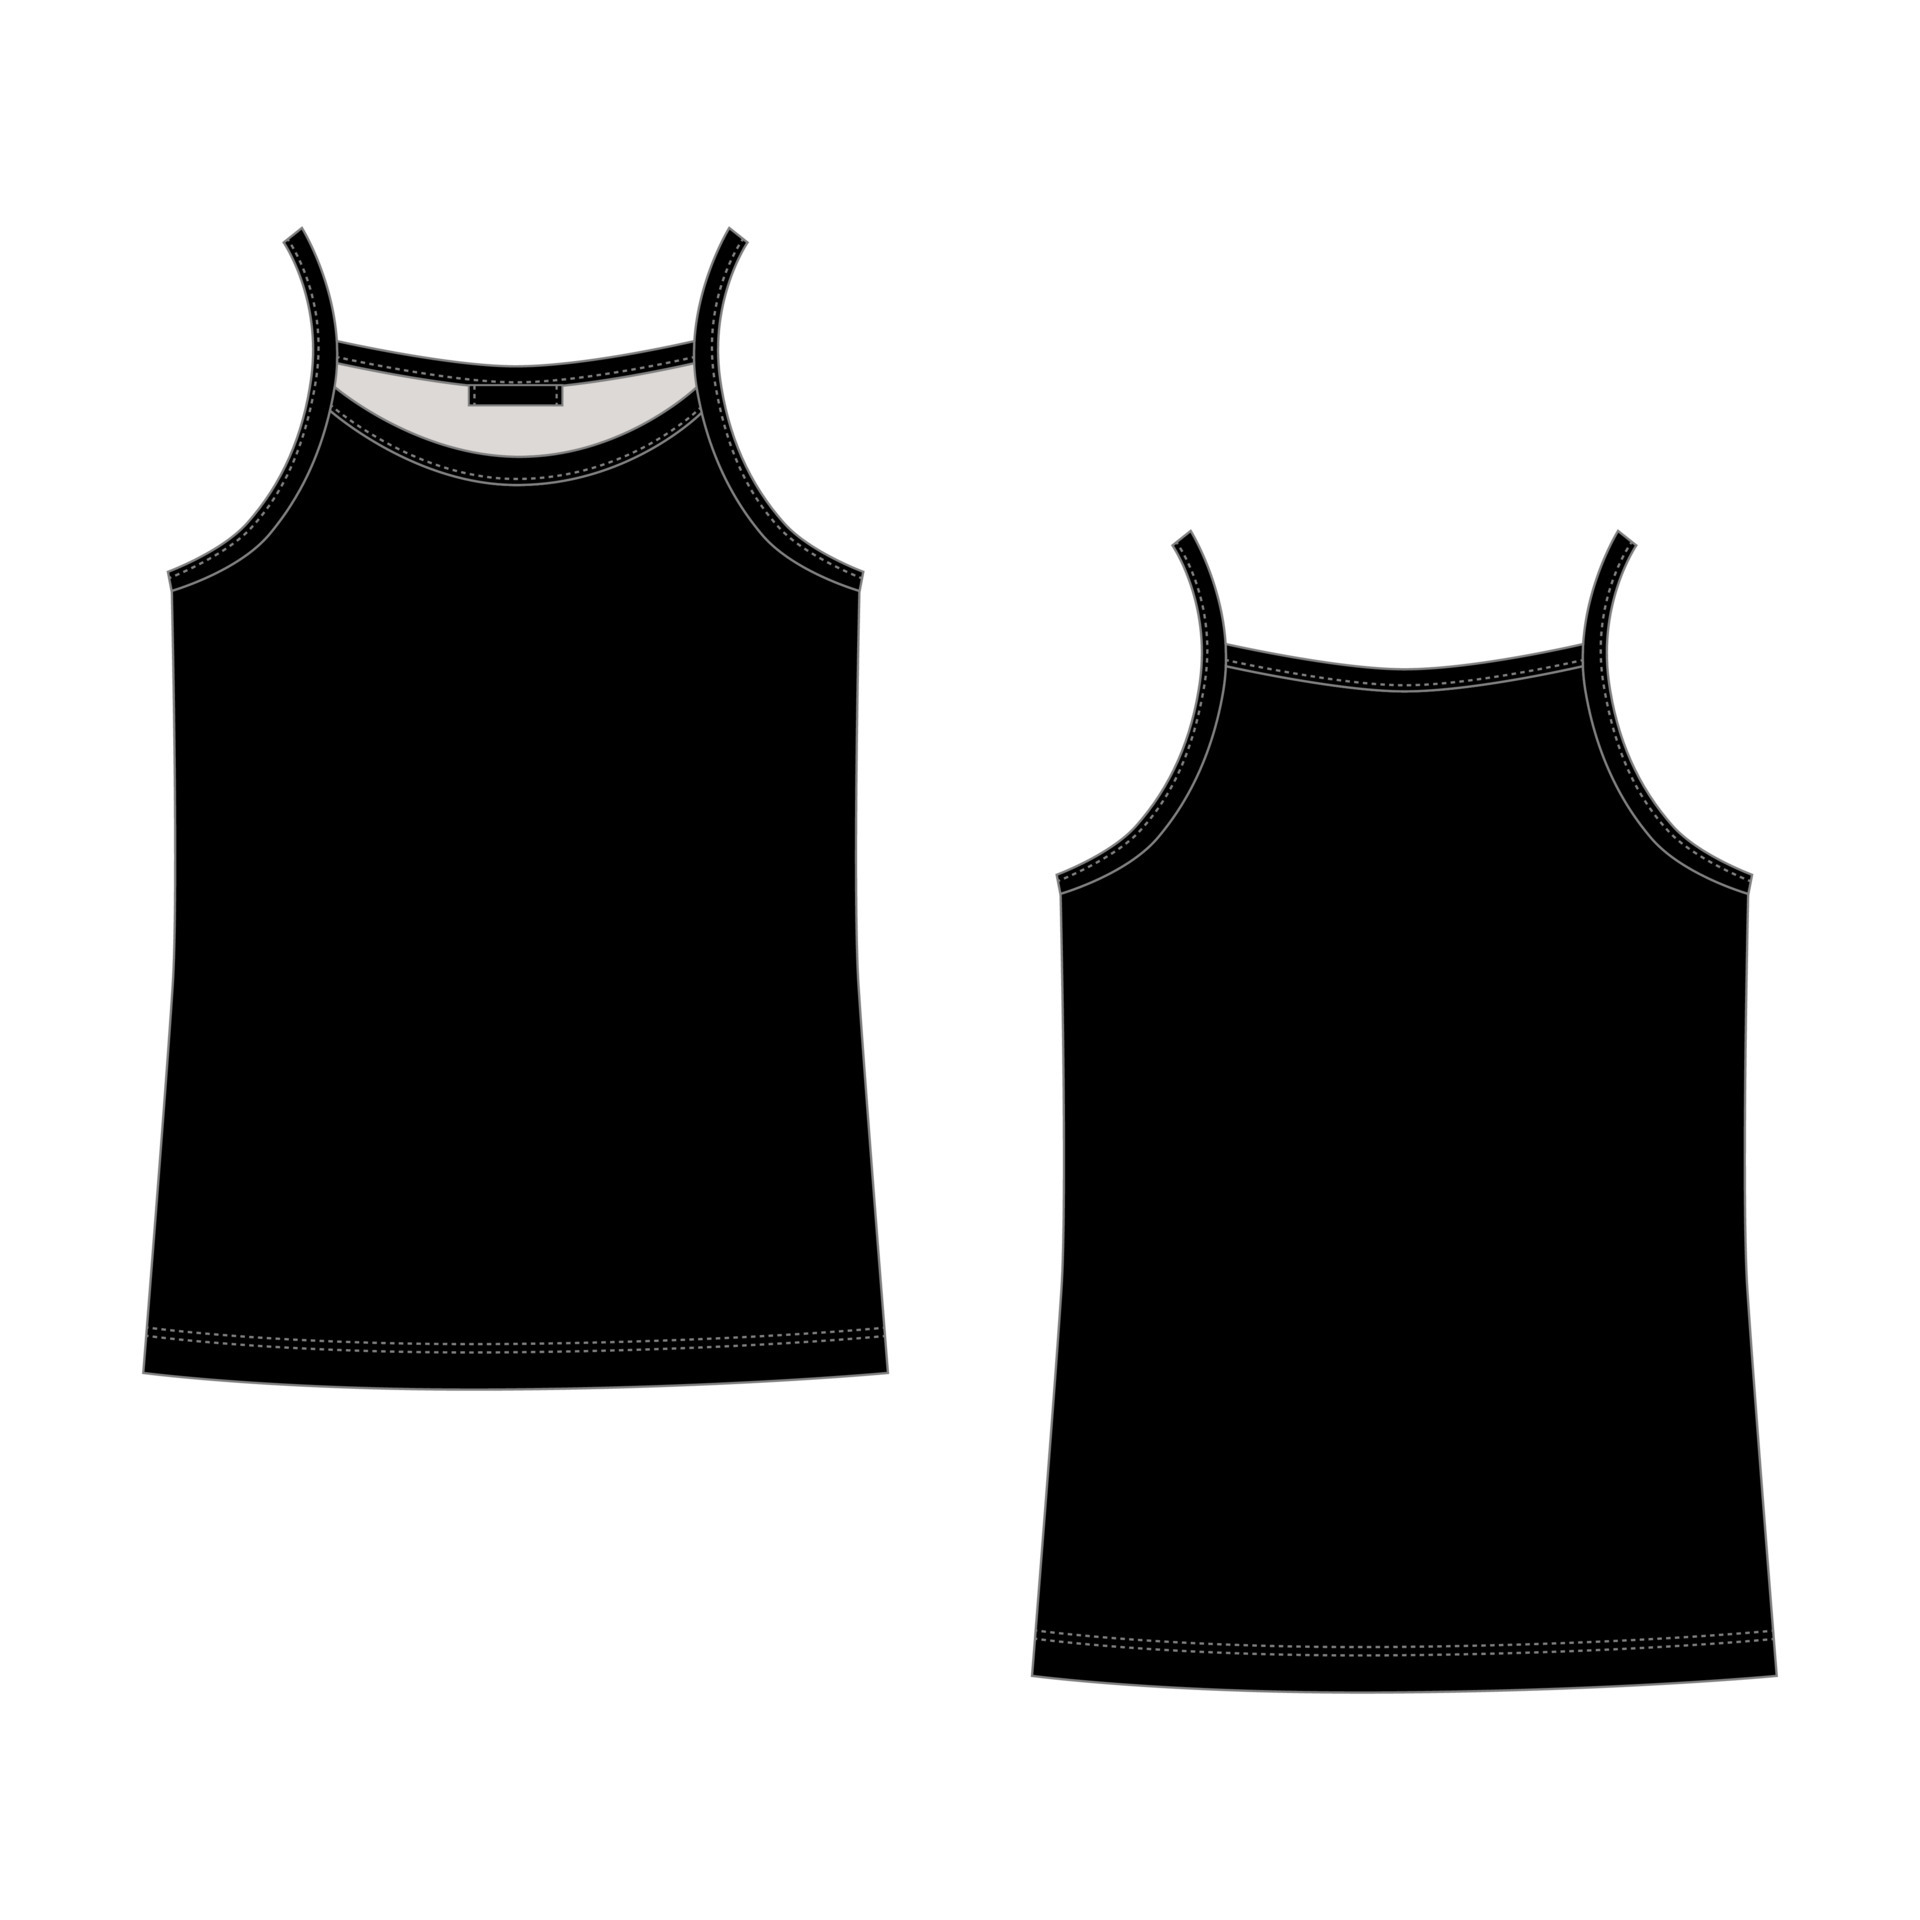 Black, White Tank Tops Template SVG Gráfico por ClothingArtStudio